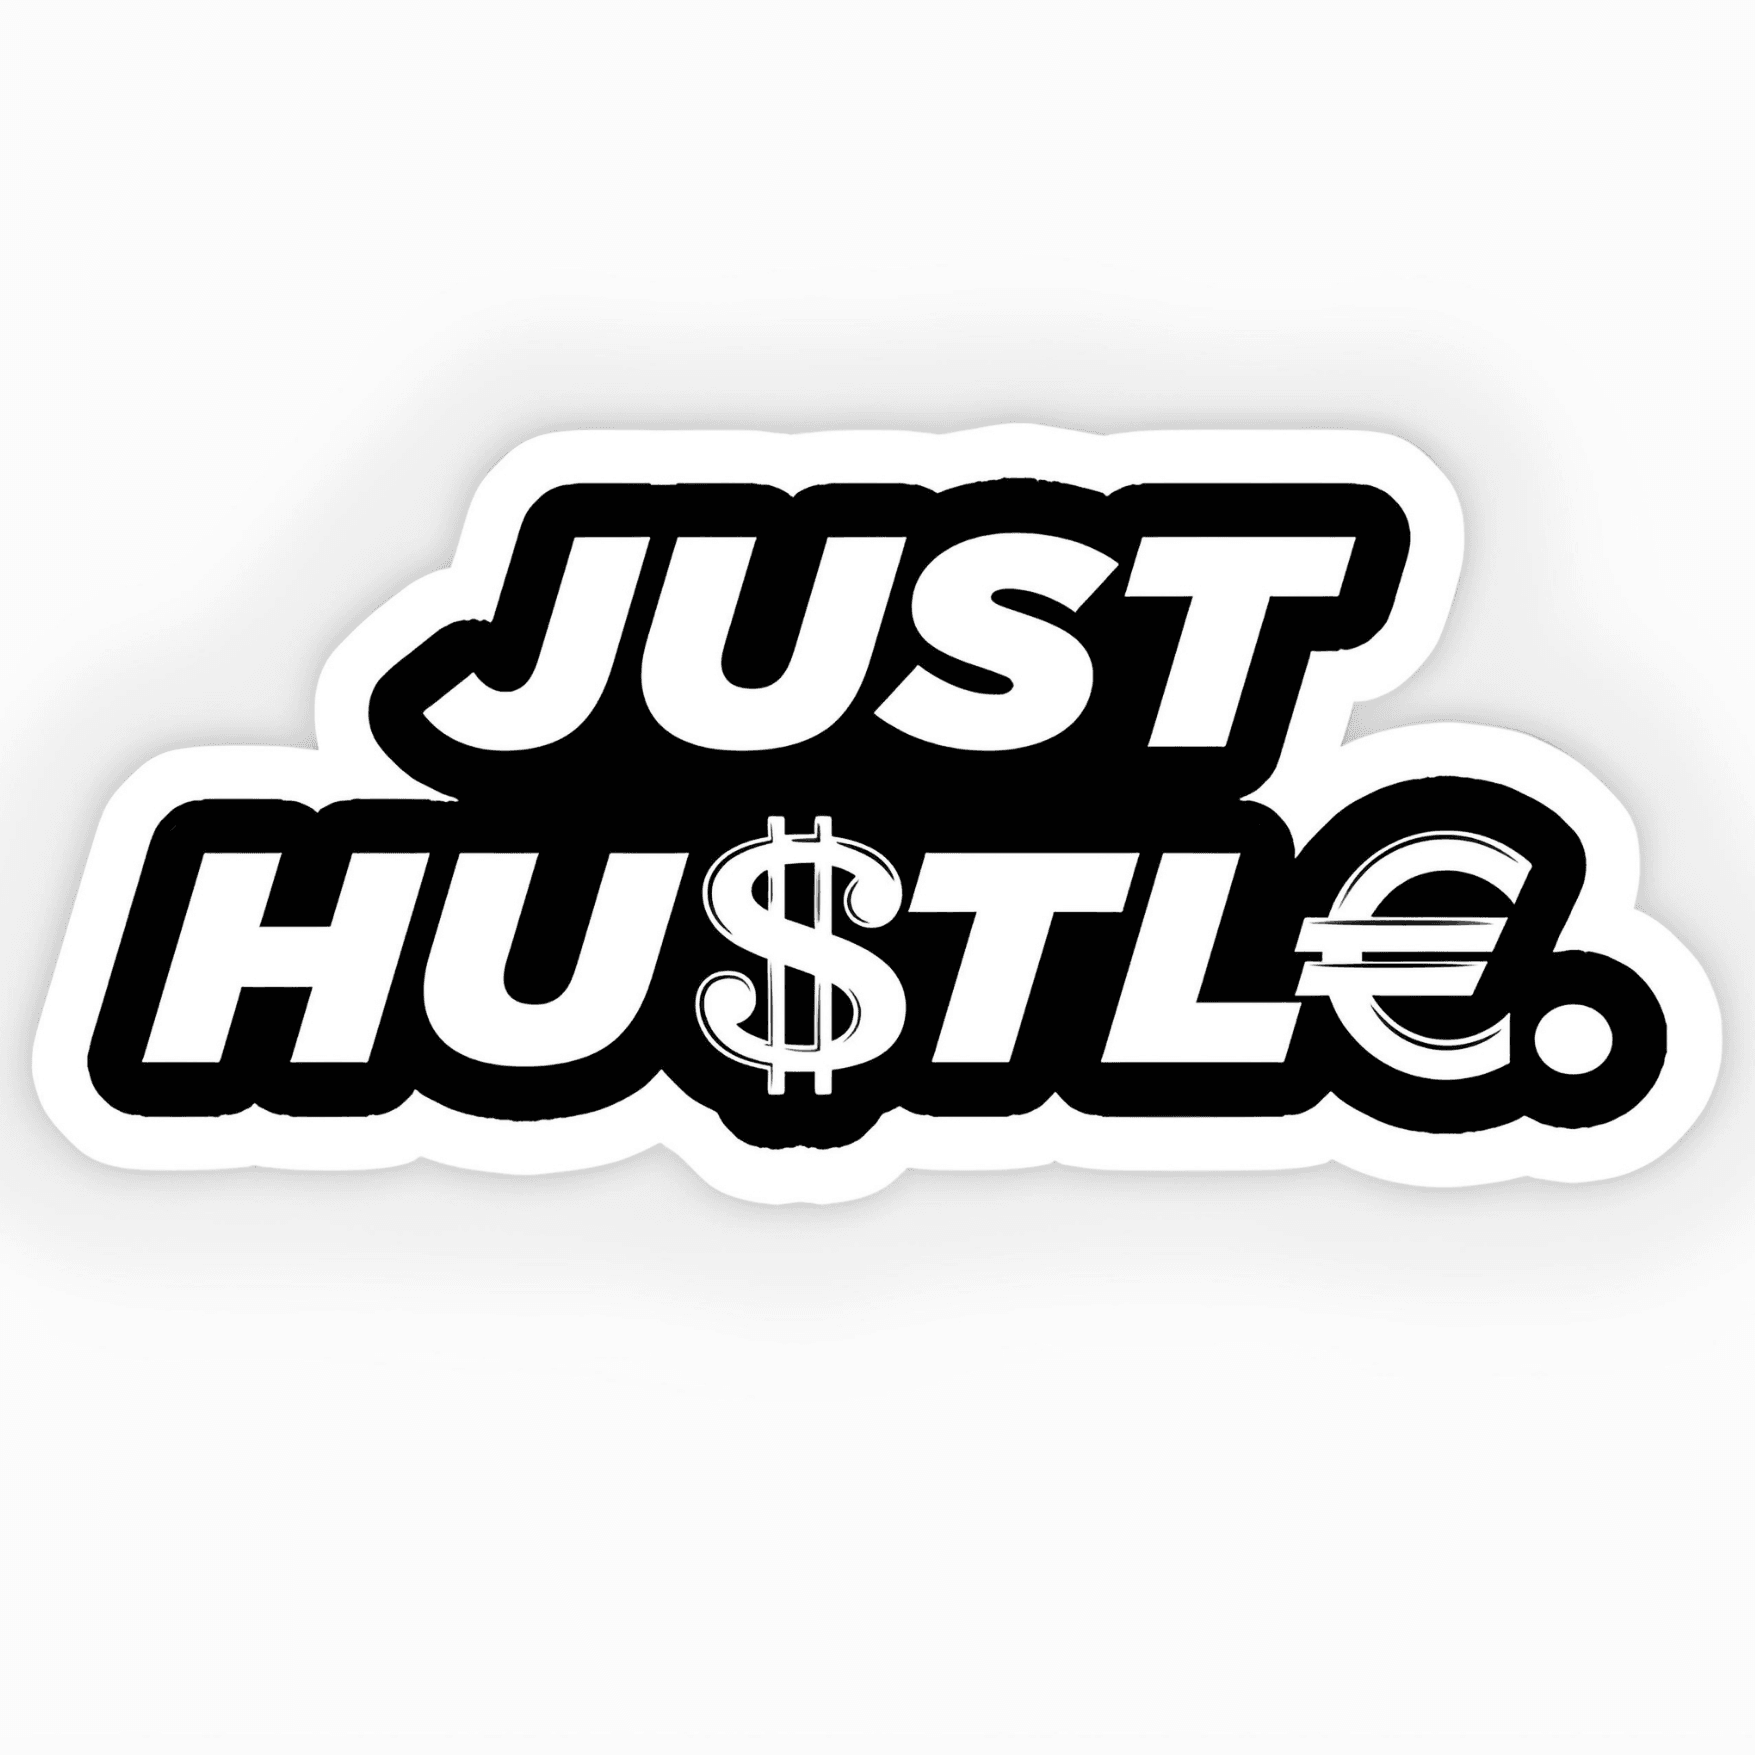 Just Hustle sticker 6cm